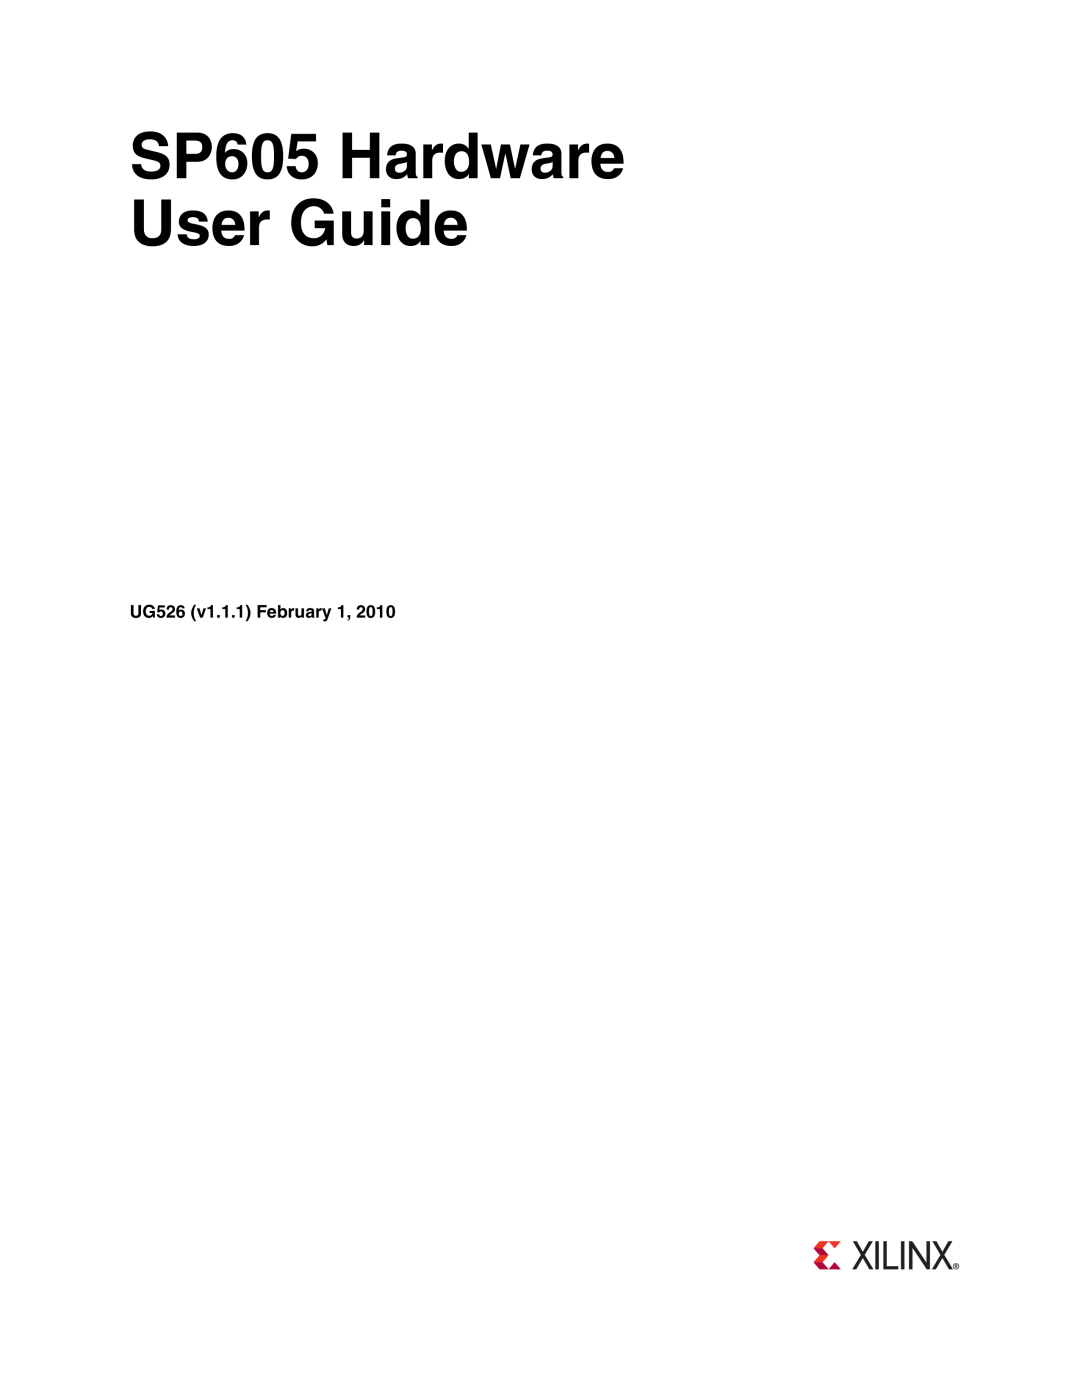 Xilinx manual UG526 v1.1.1 February 1, 2010 optional, SP605 Hardware User Guide, Guide Subtitle optional 